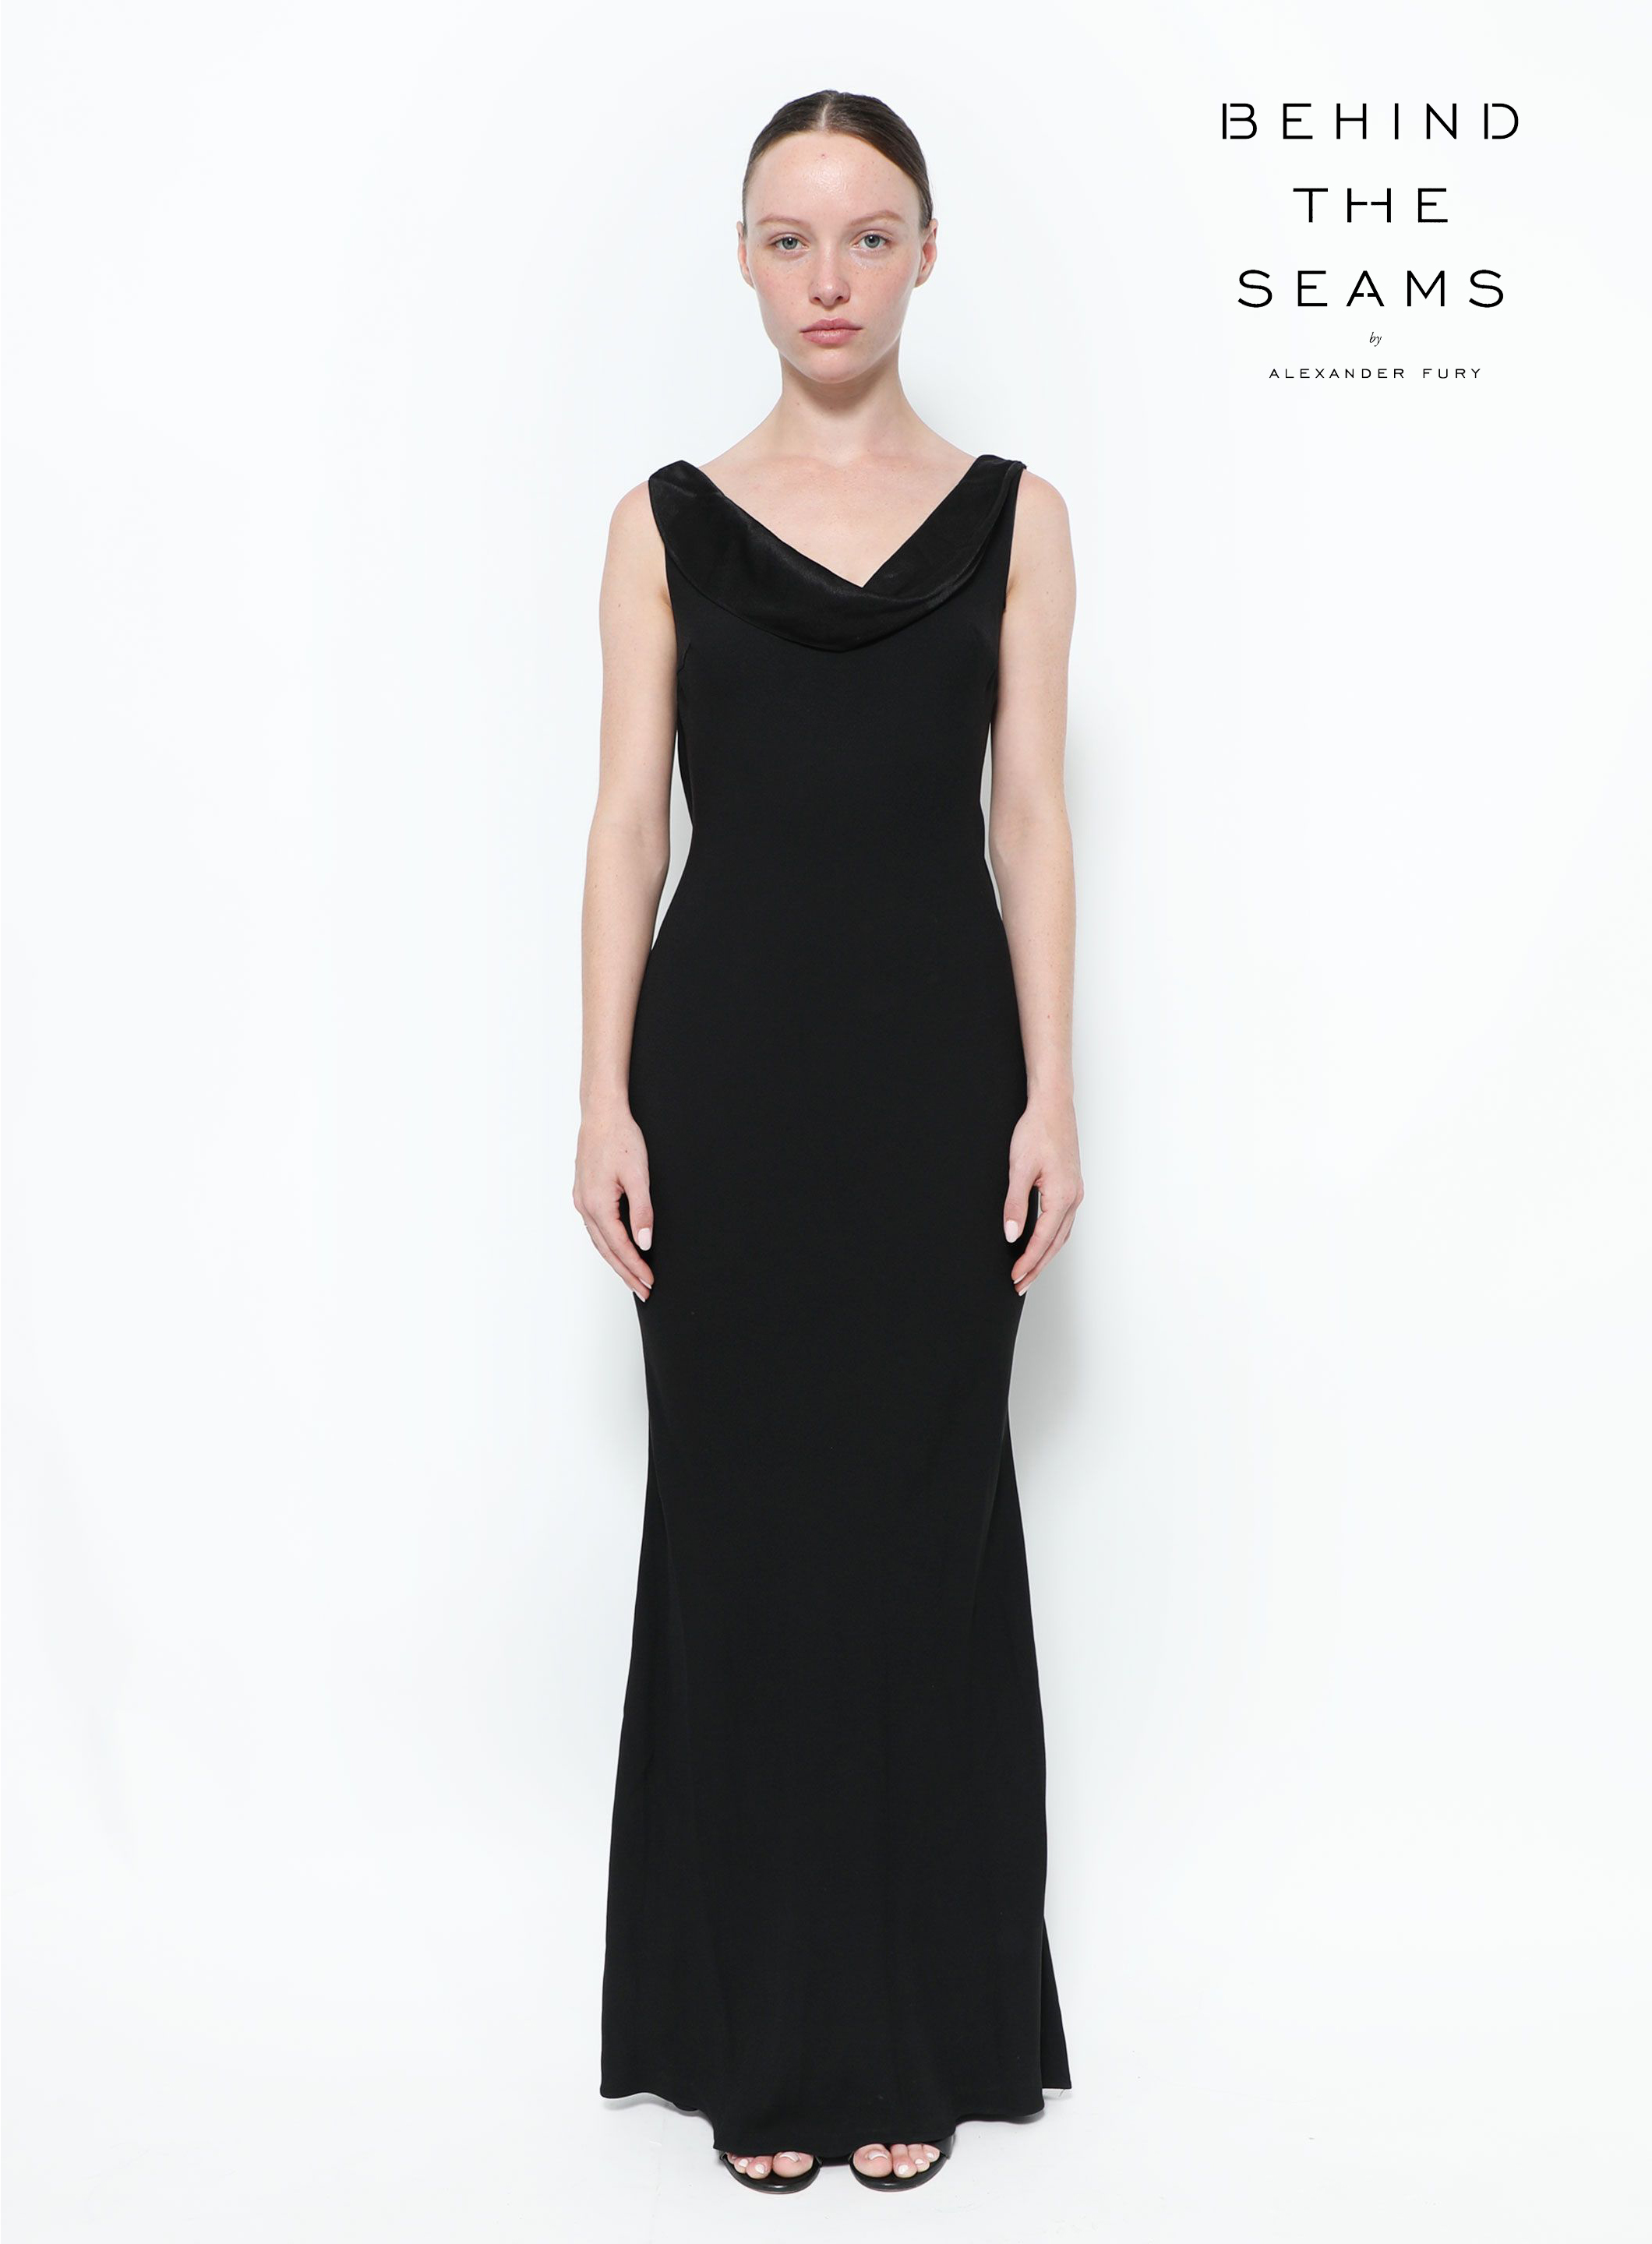 John Galliano, Evening dress, French